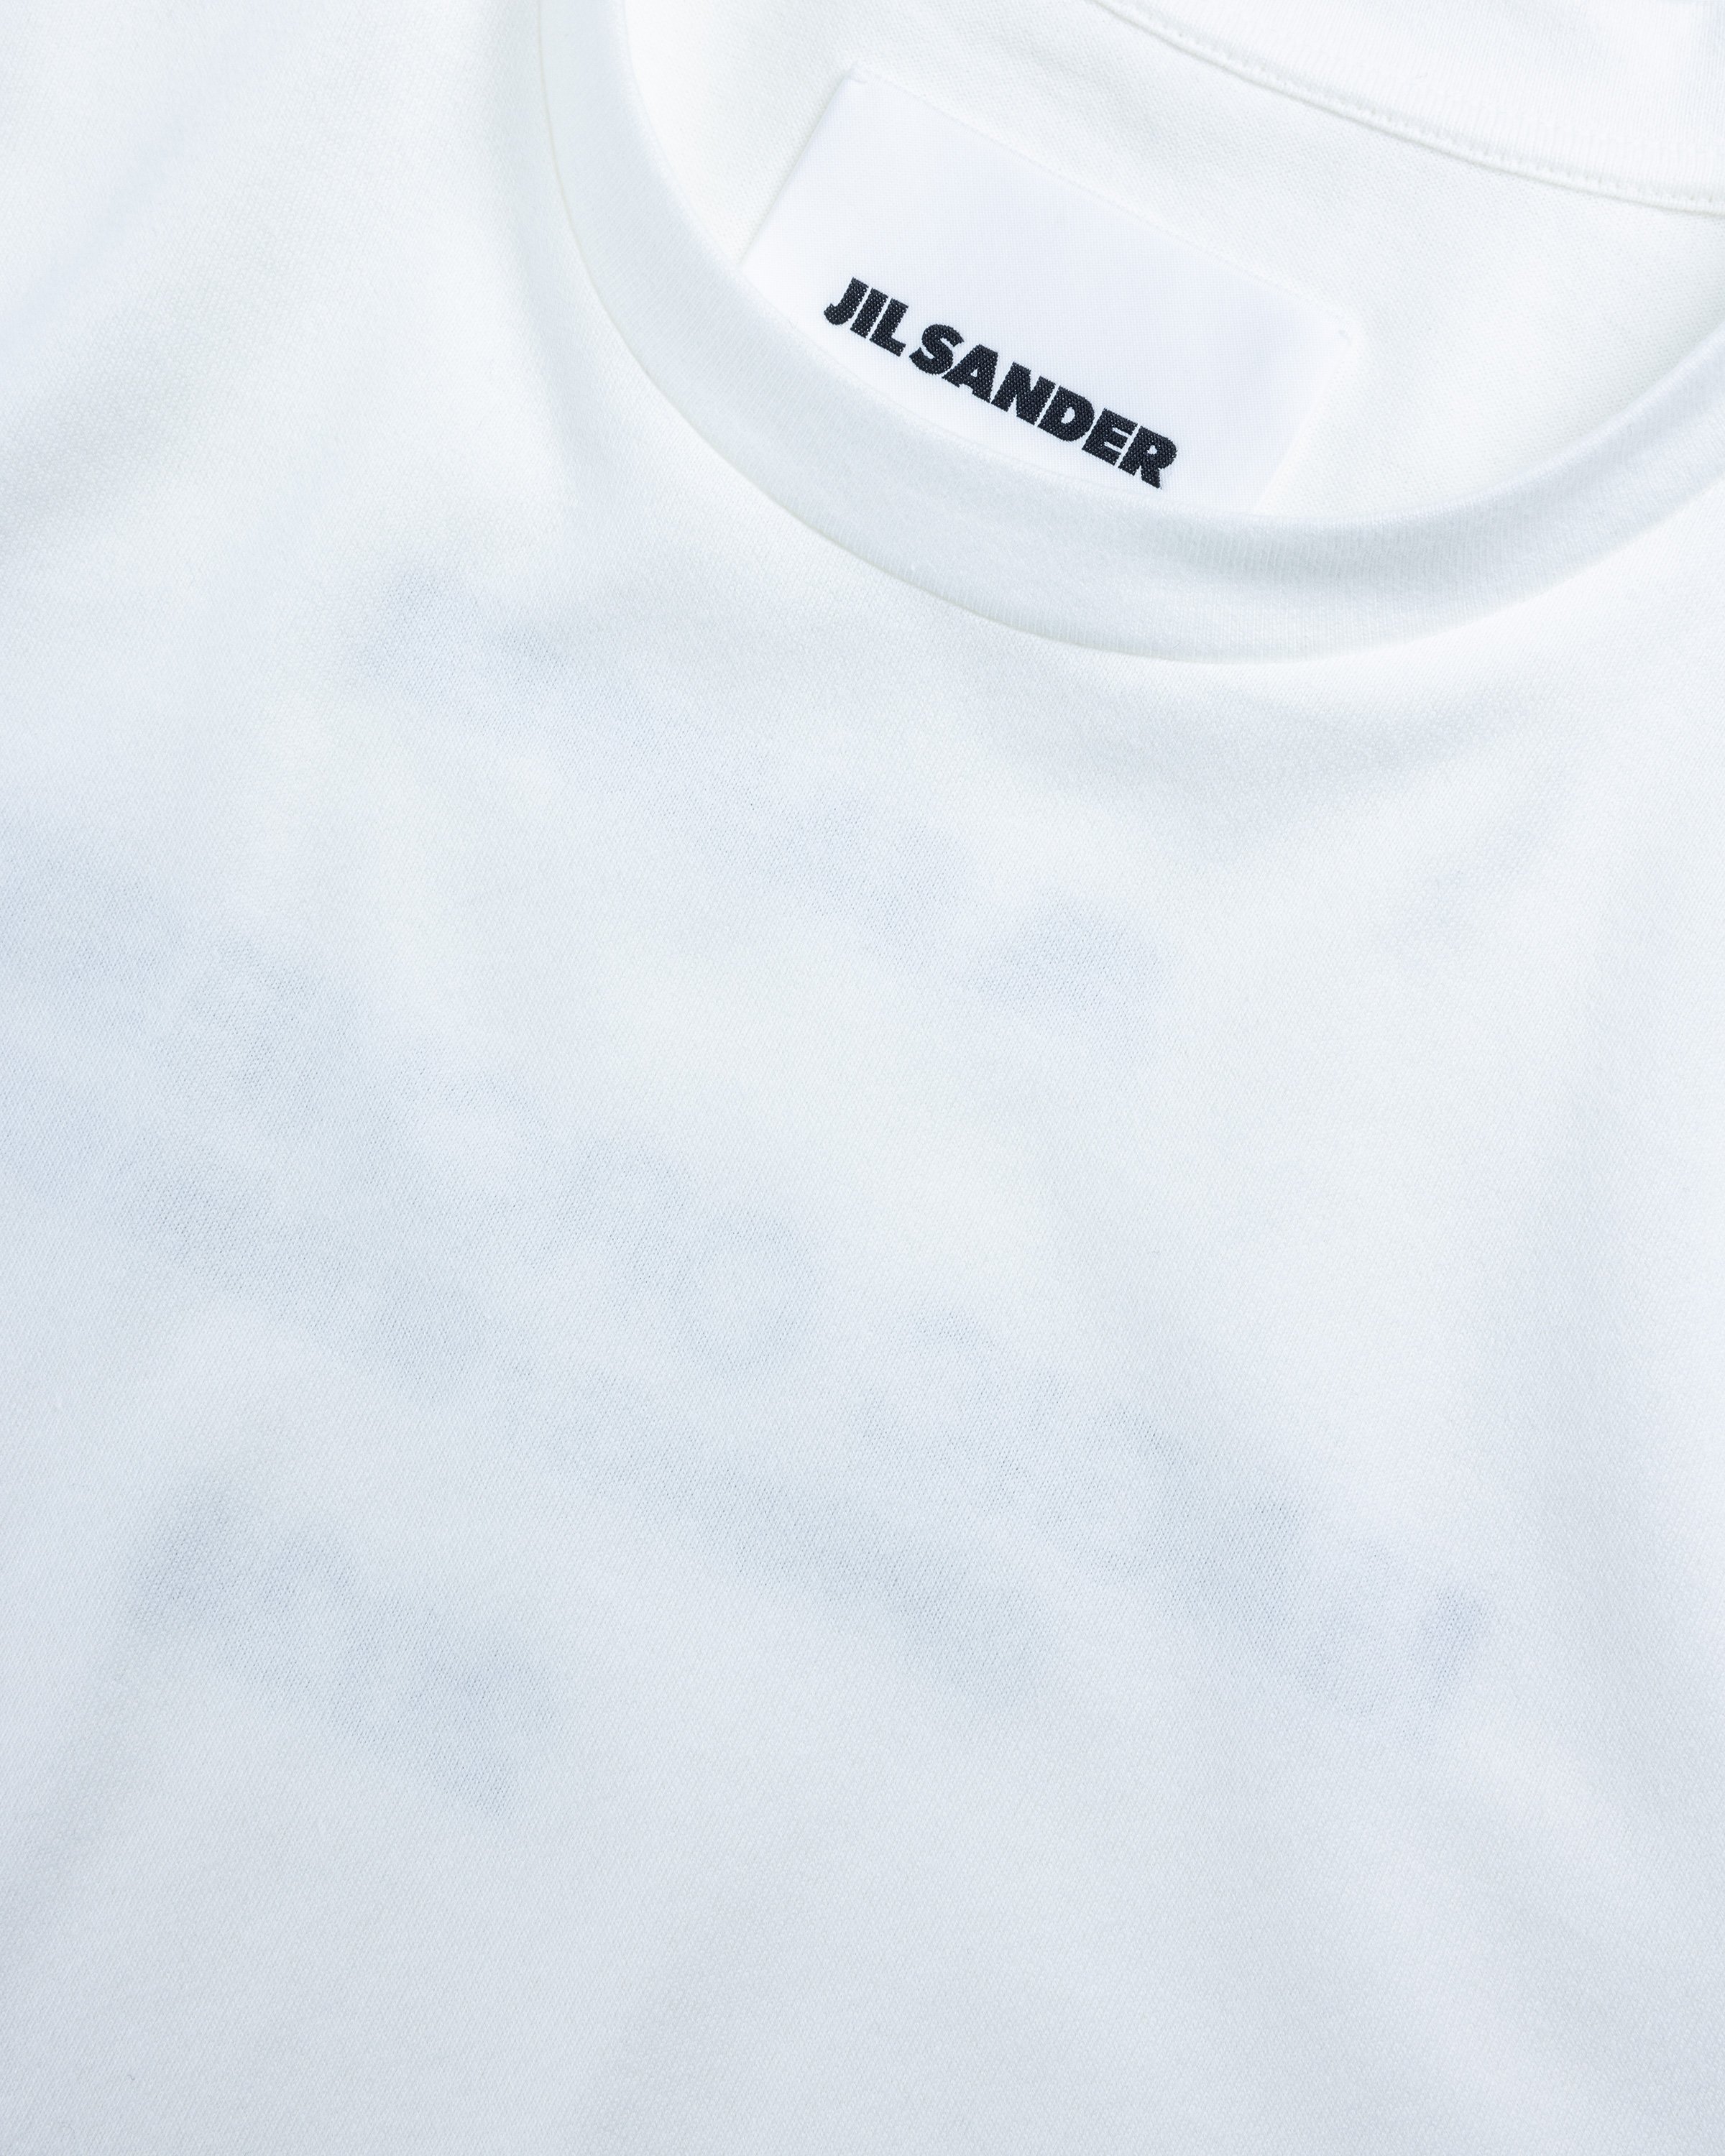 Jil Sander - Sheer T-Shirt Ls + Printed T-Shirt Ss - Clothing - White - Image 7